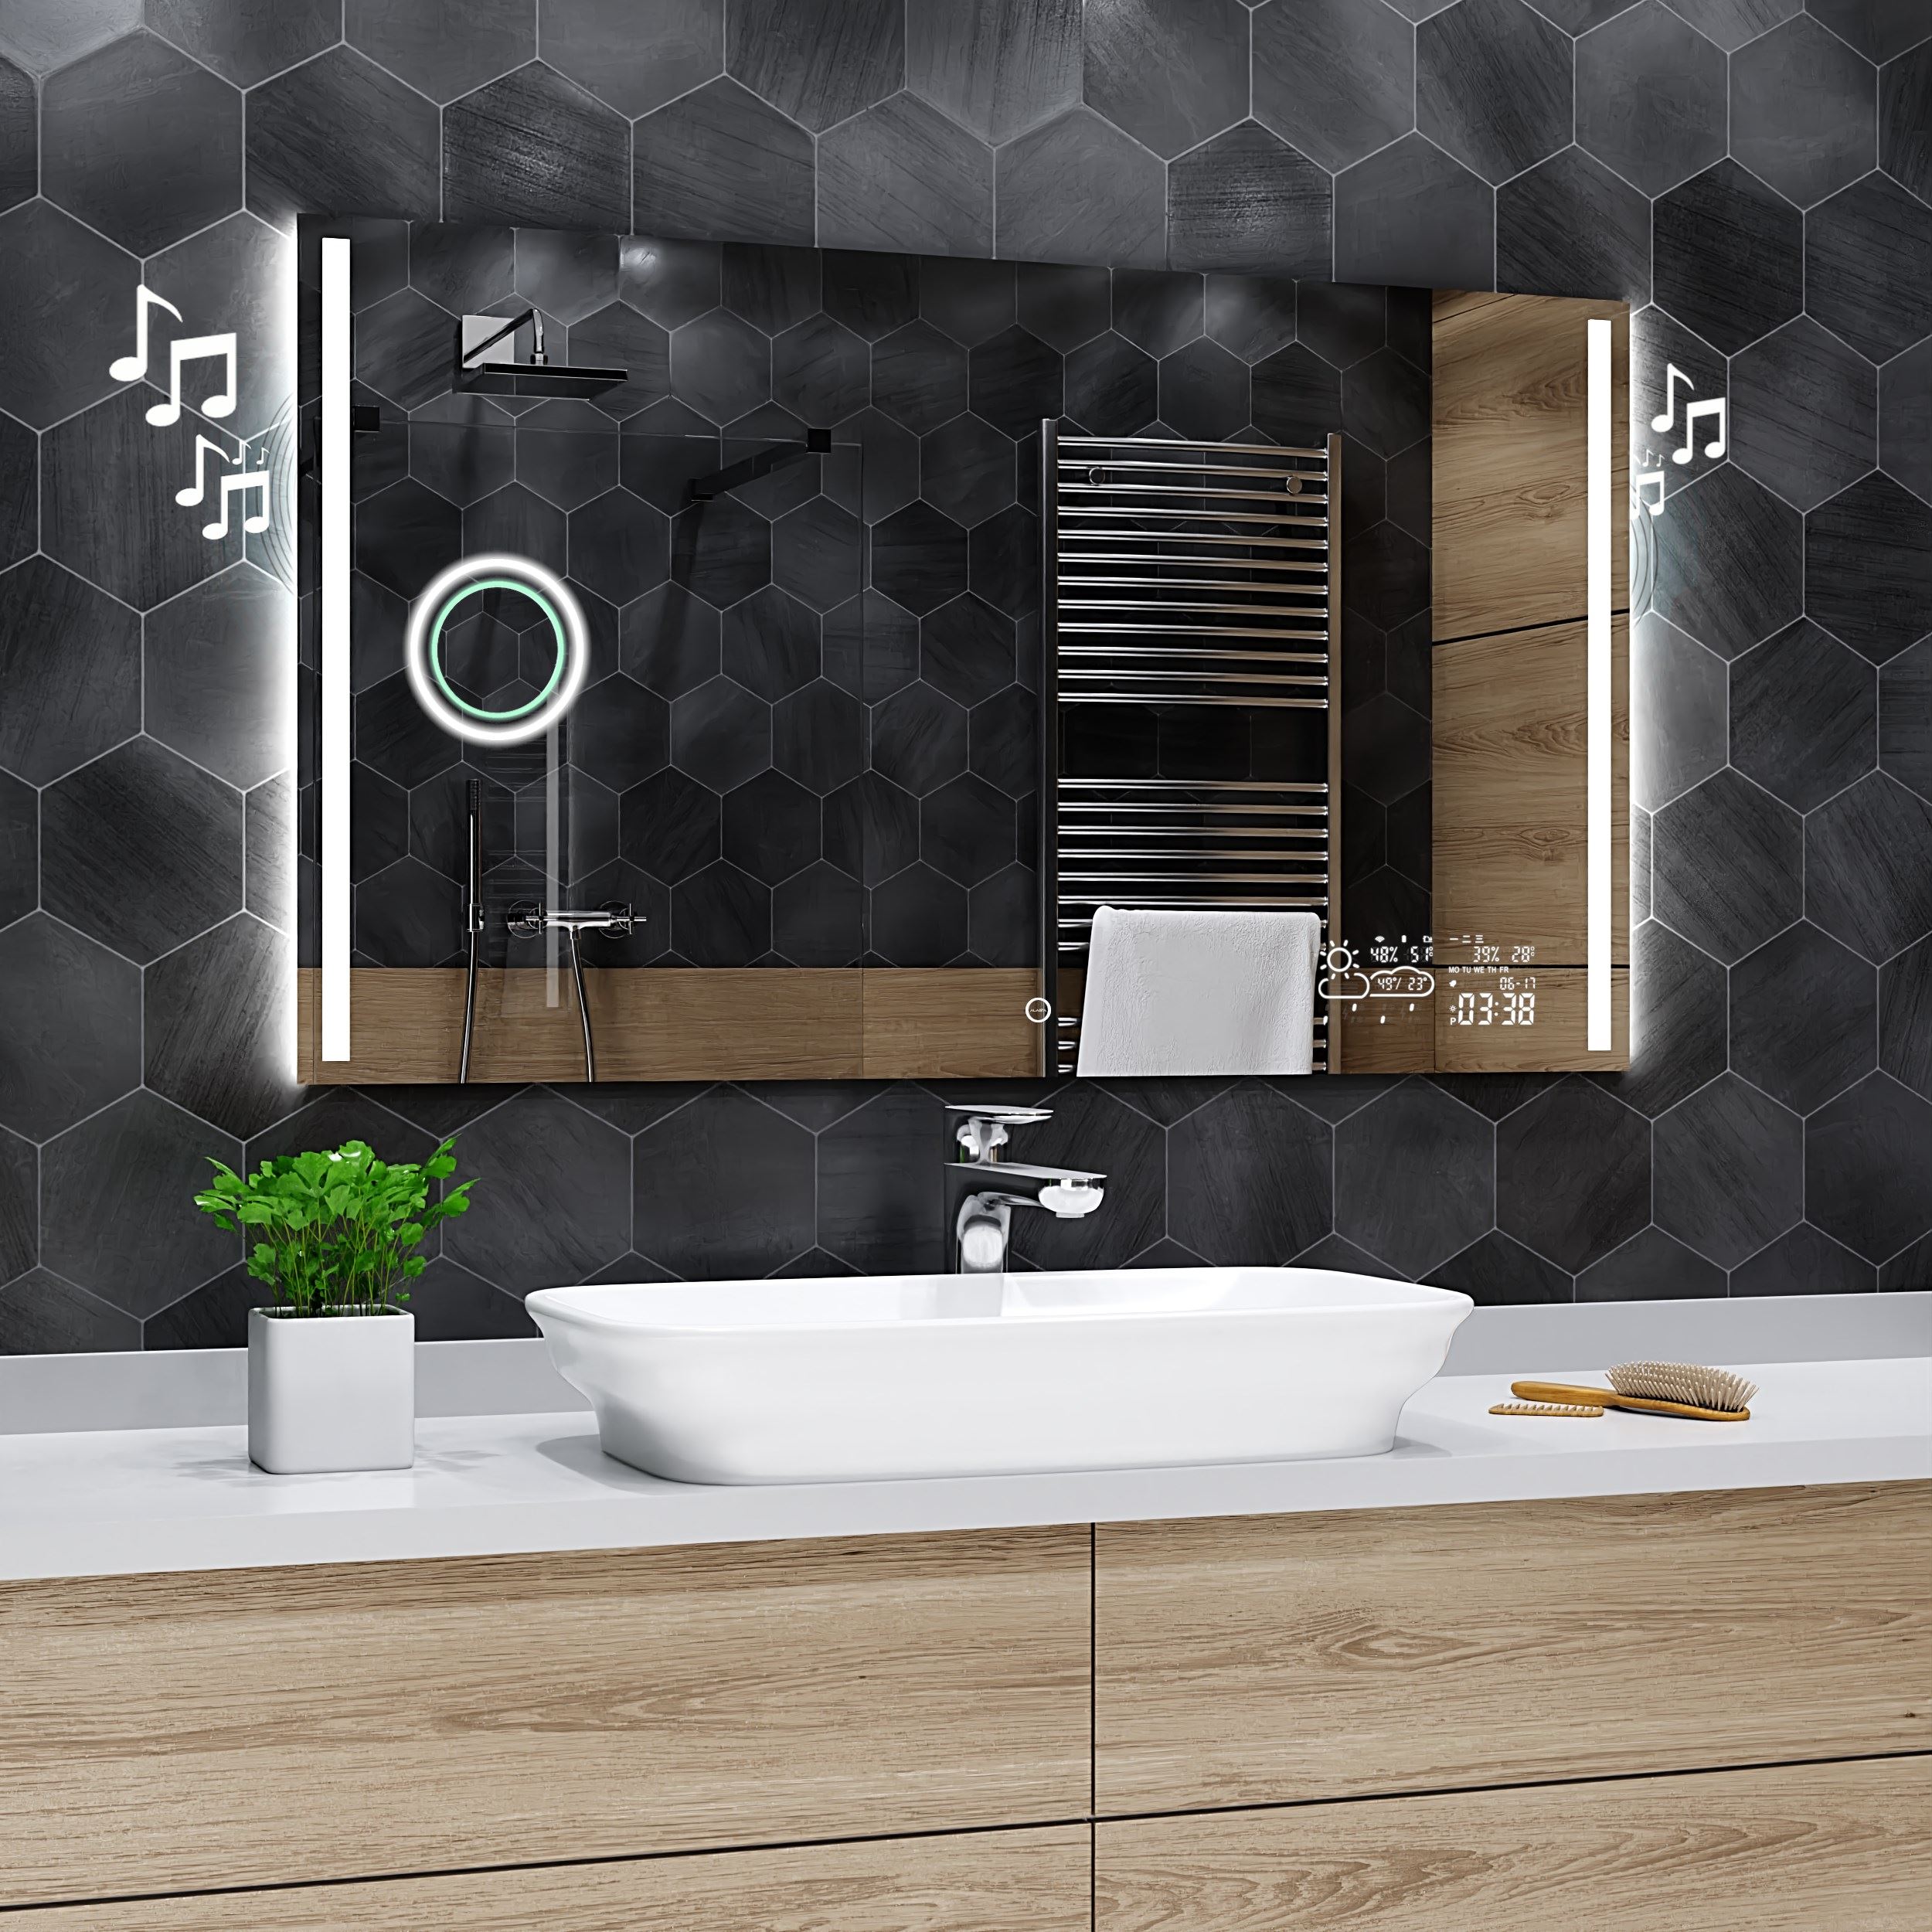 Led Bathroom Mirror Atlanta Bathroom Mirror With Led Custom Mirror Choose Your Accessories